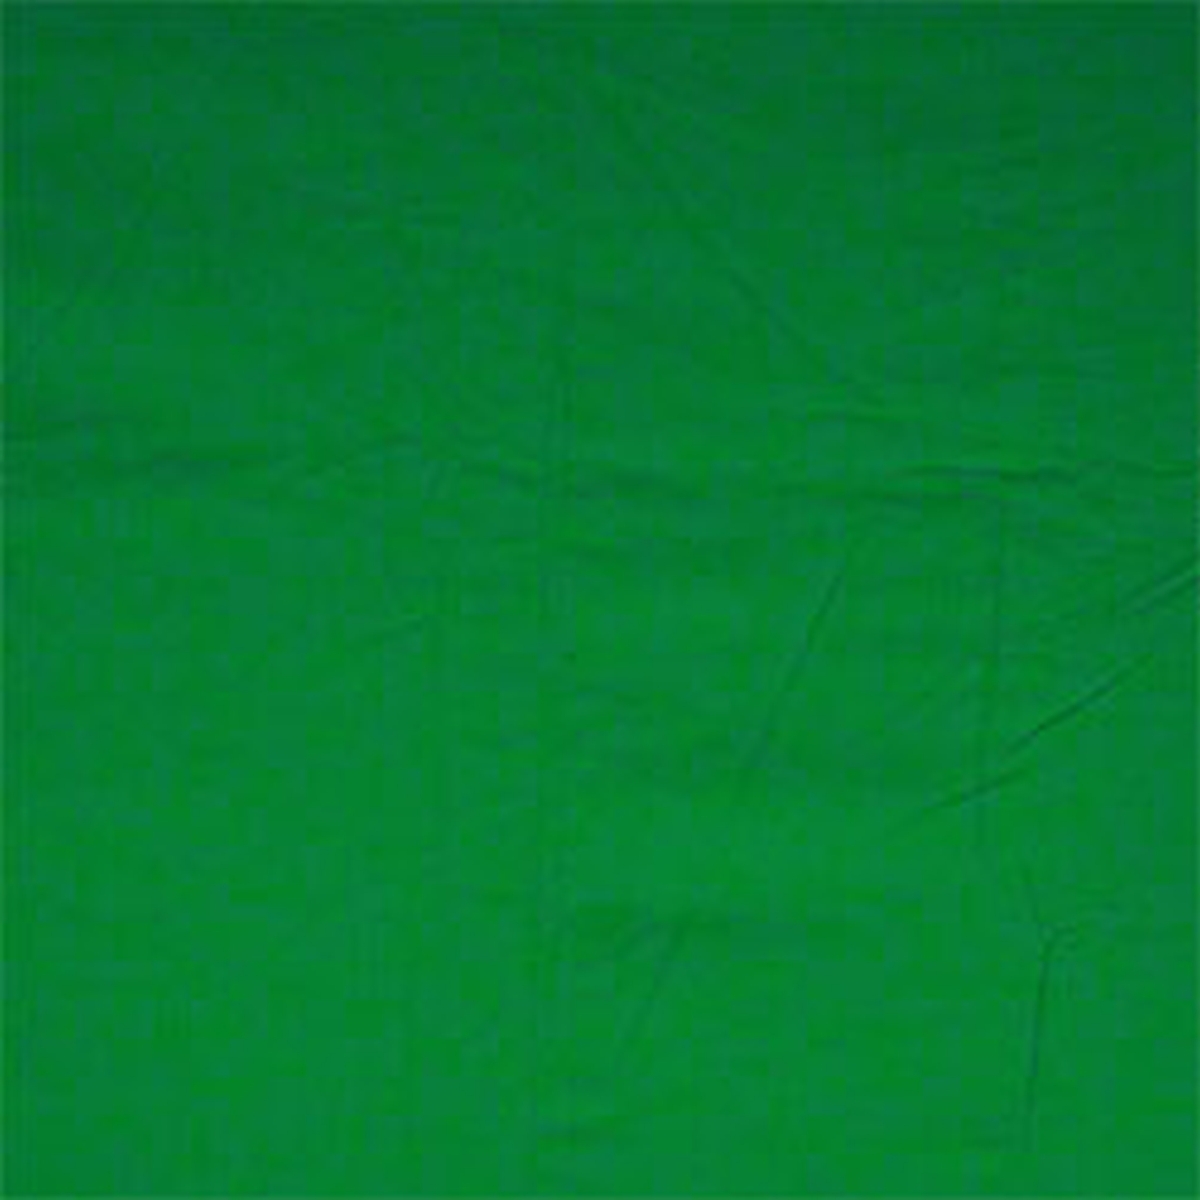 Walimex pro Stoffhintergrund 2,85 x 6 m chroma key grün